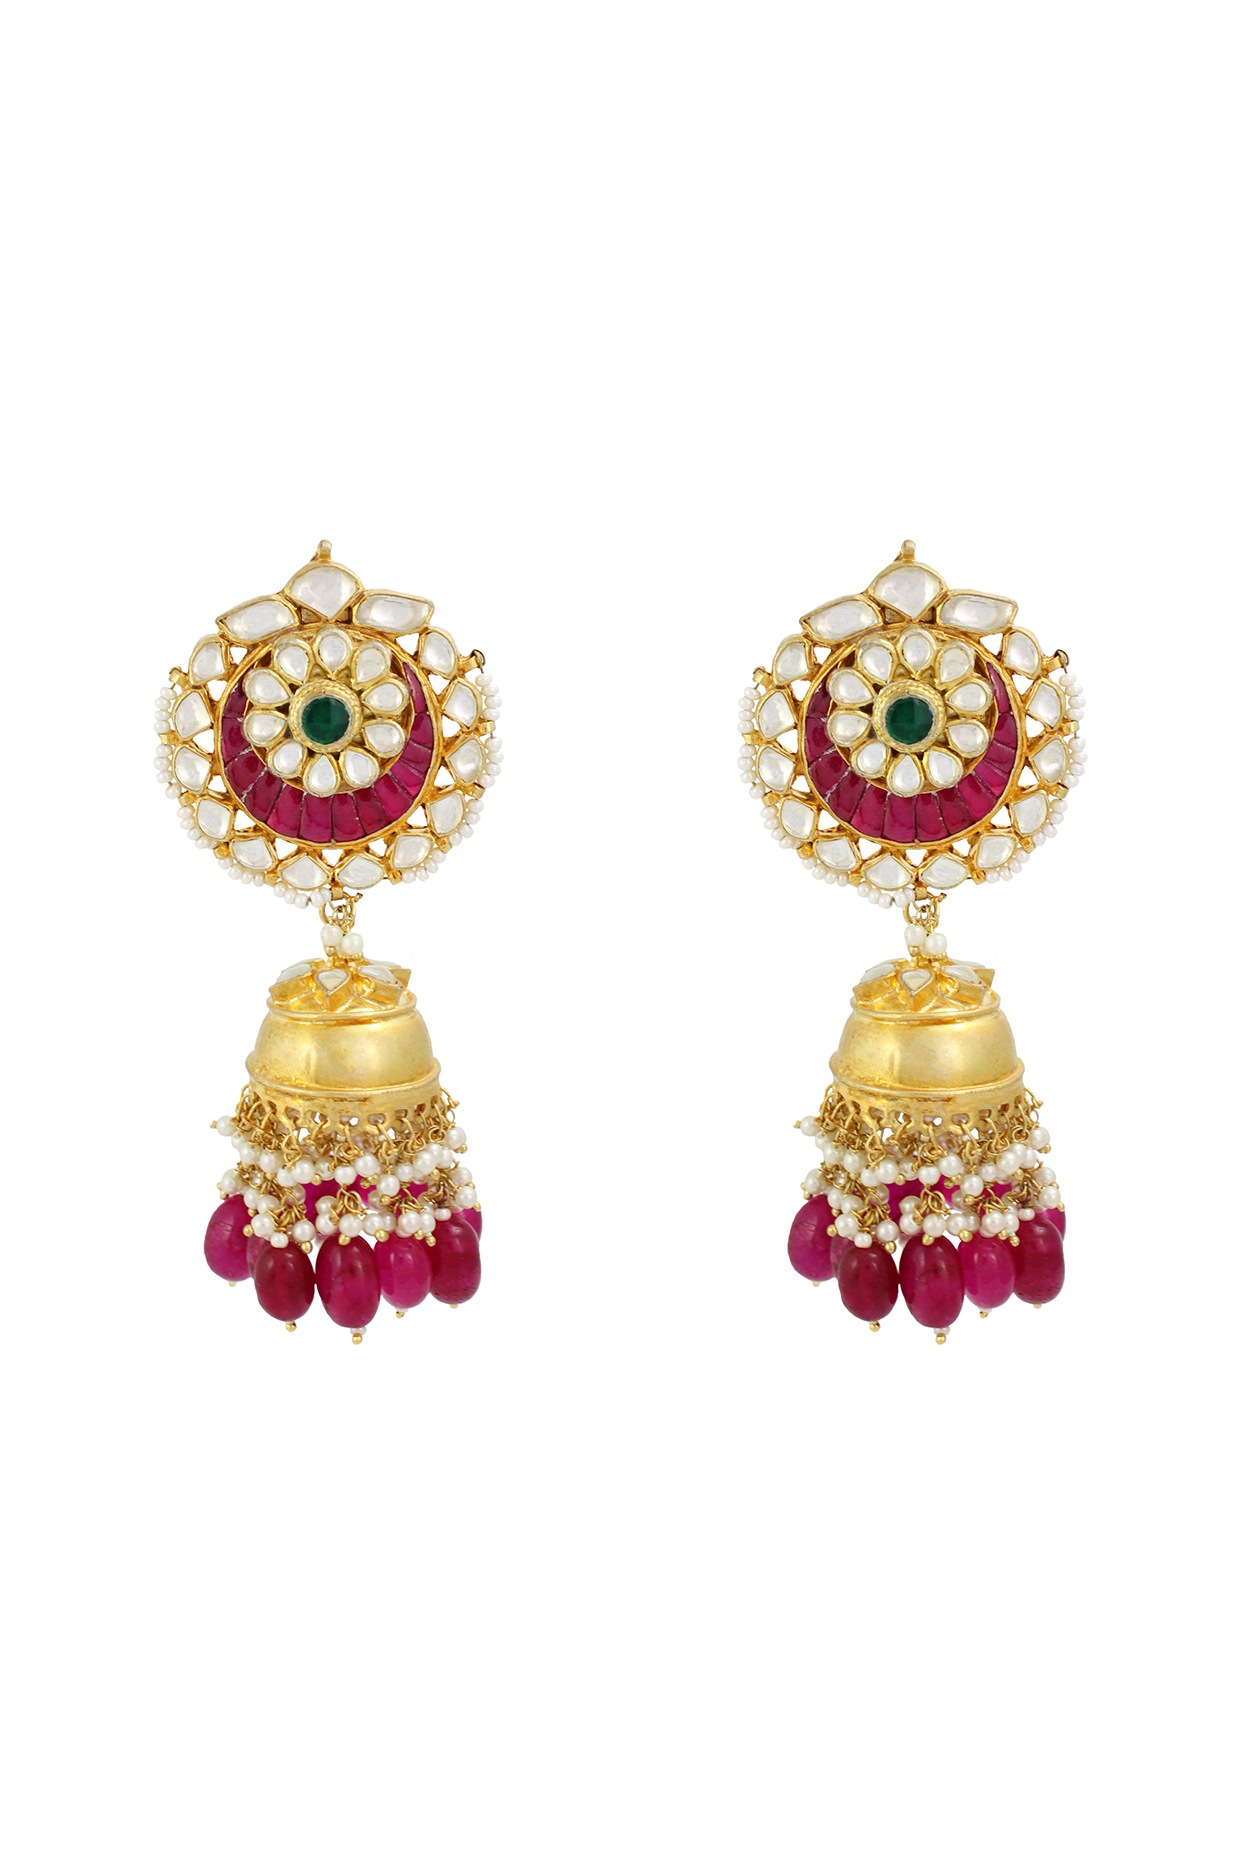 Indian Bridal Gold Plated Kundan Heavy Wedding Party Jhumka Earrings Girls  Women | eBay